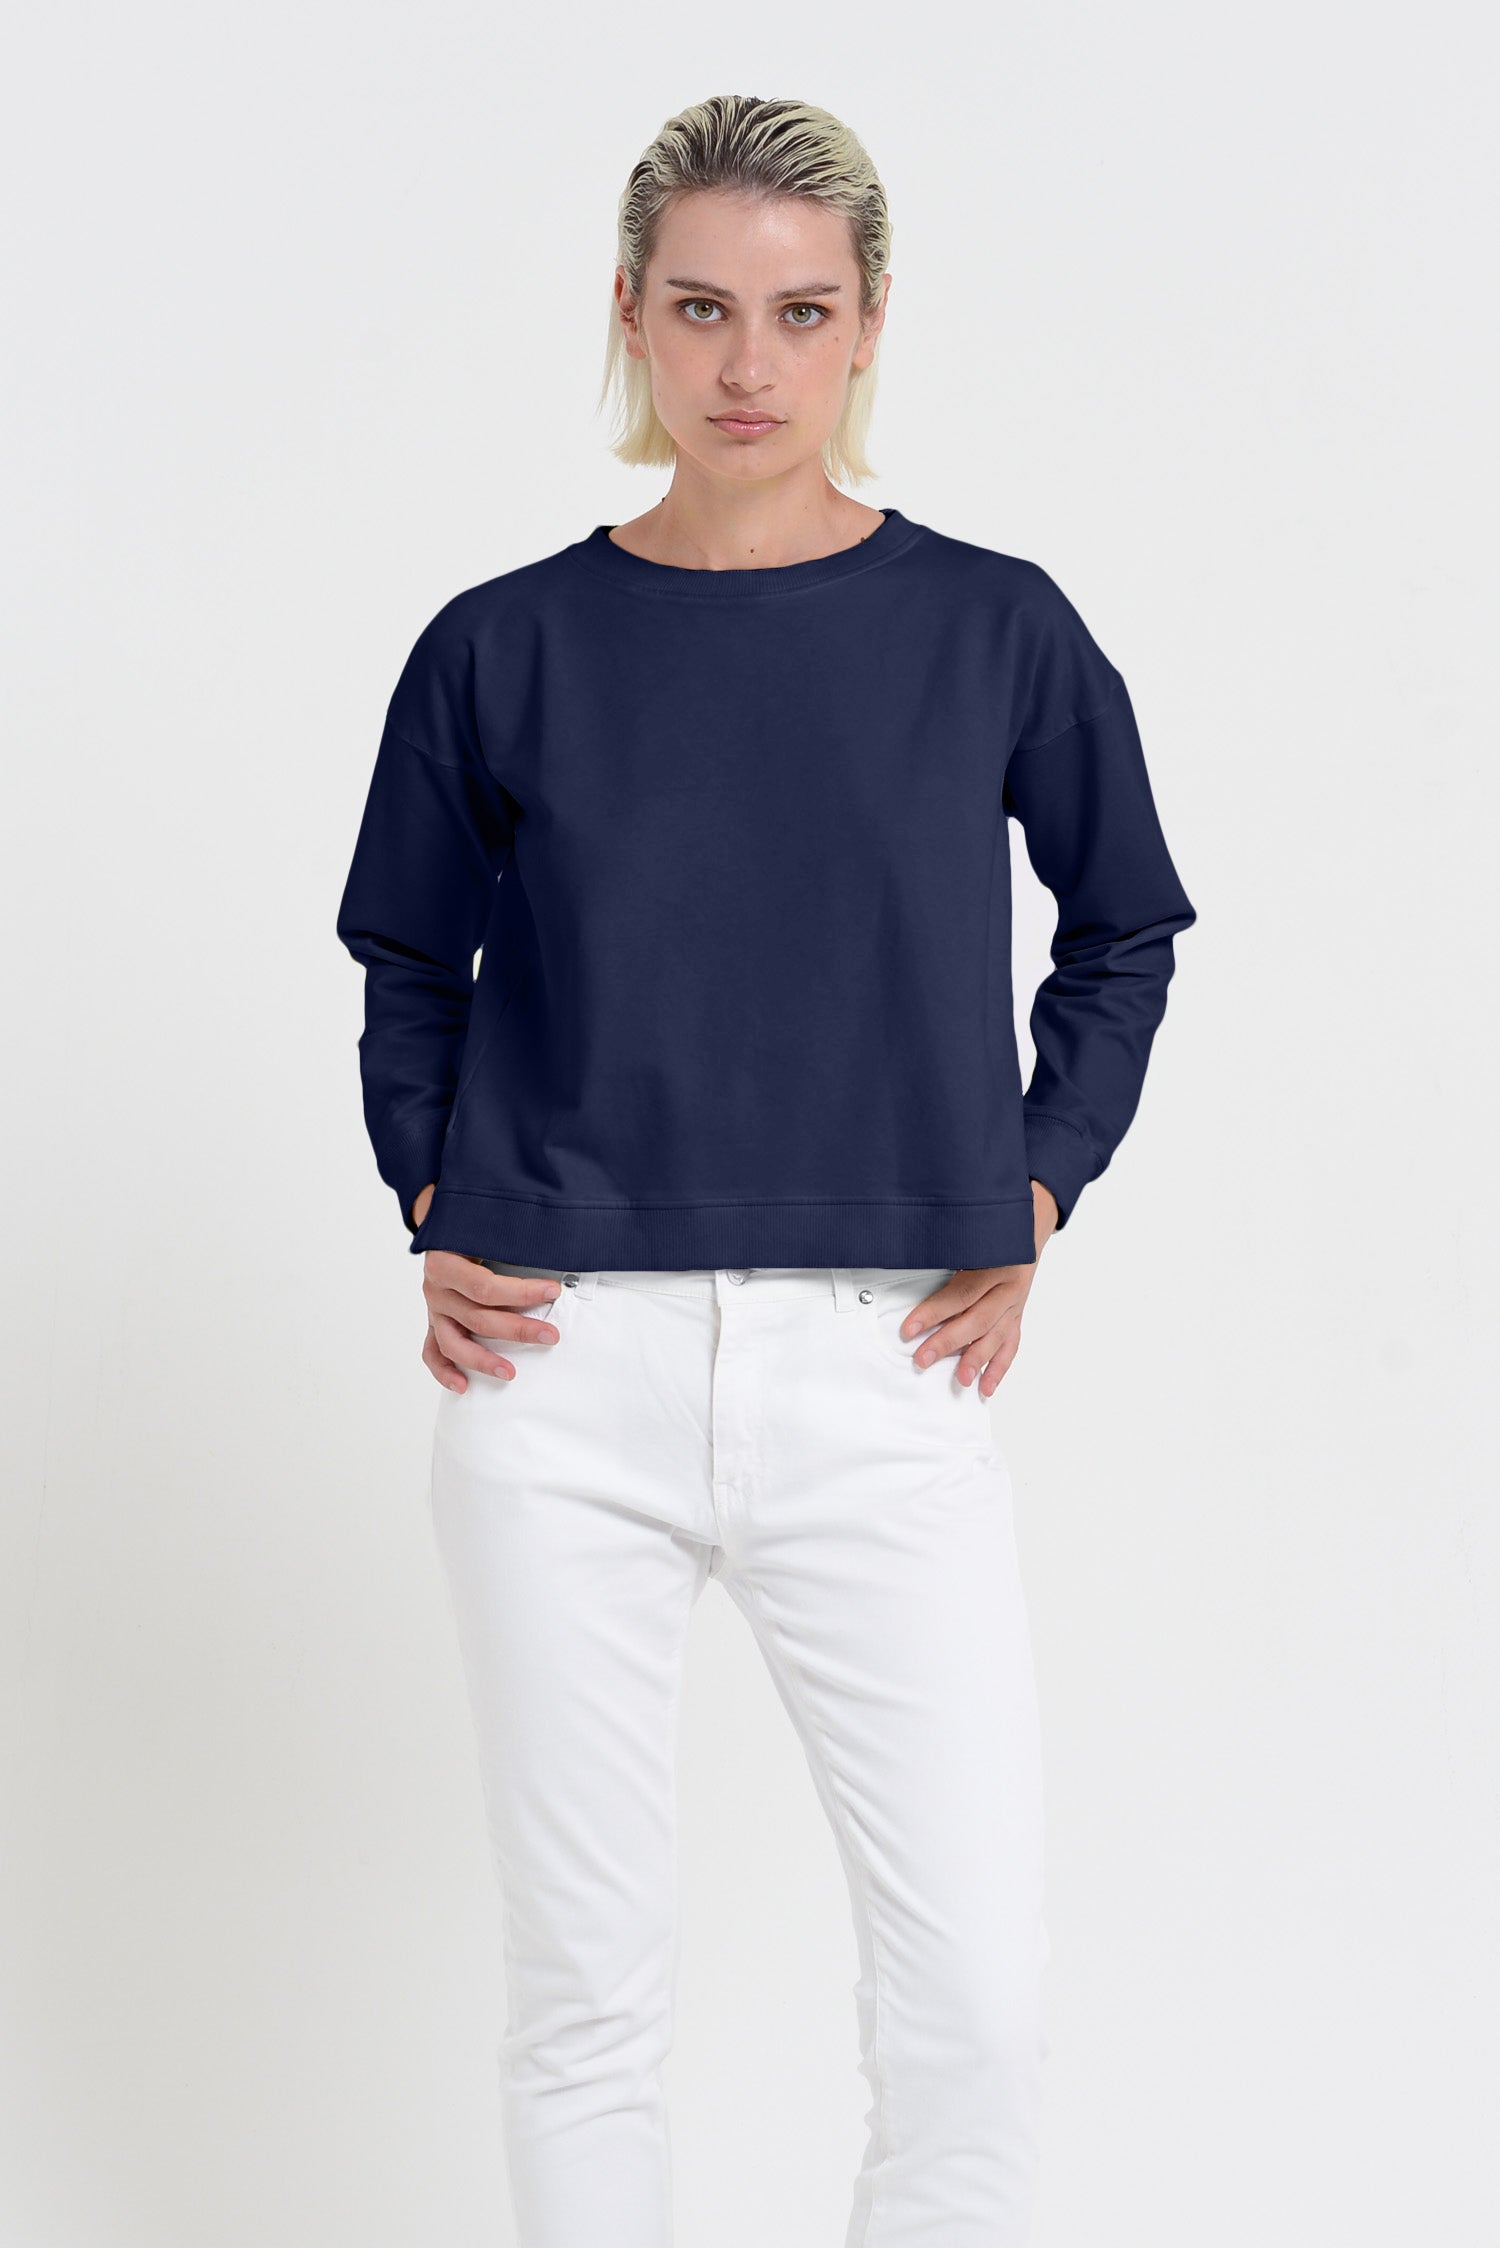 Roxie Sweatshirt - Women's Cropped Cotton Sweatshirt - Navy